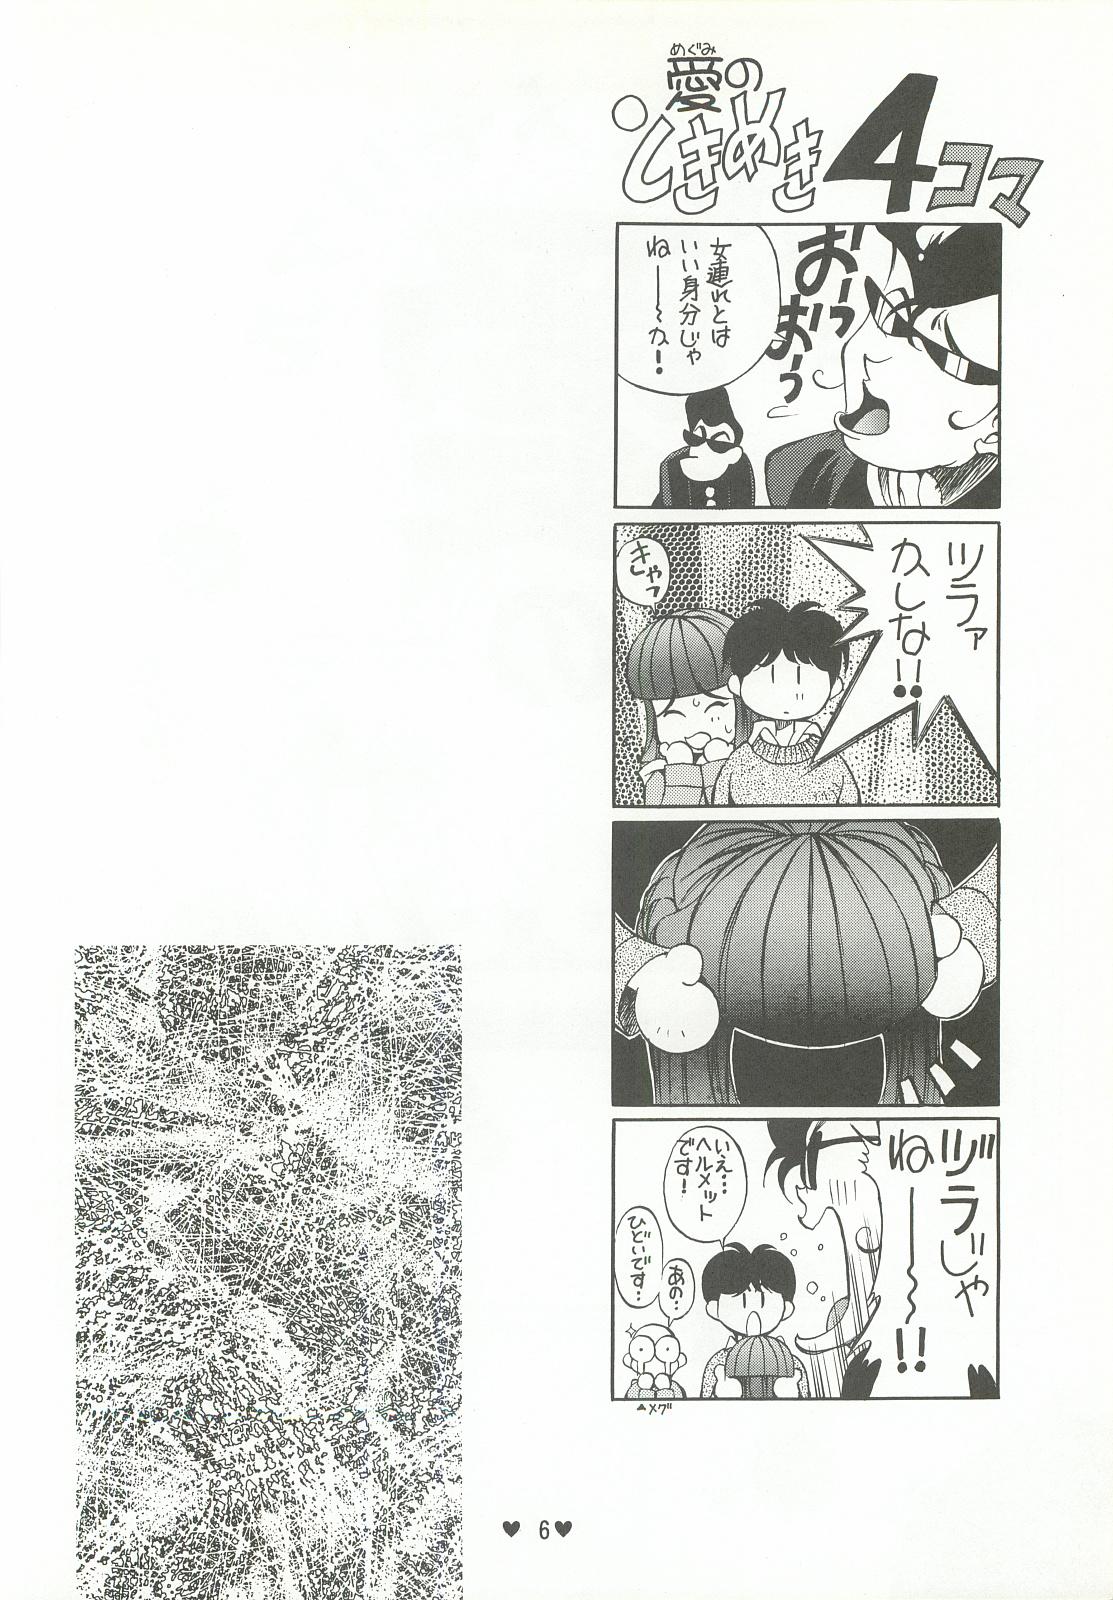 Oral Yappari Ai dayone. - Tokimeki memorial Uncut - Page 7